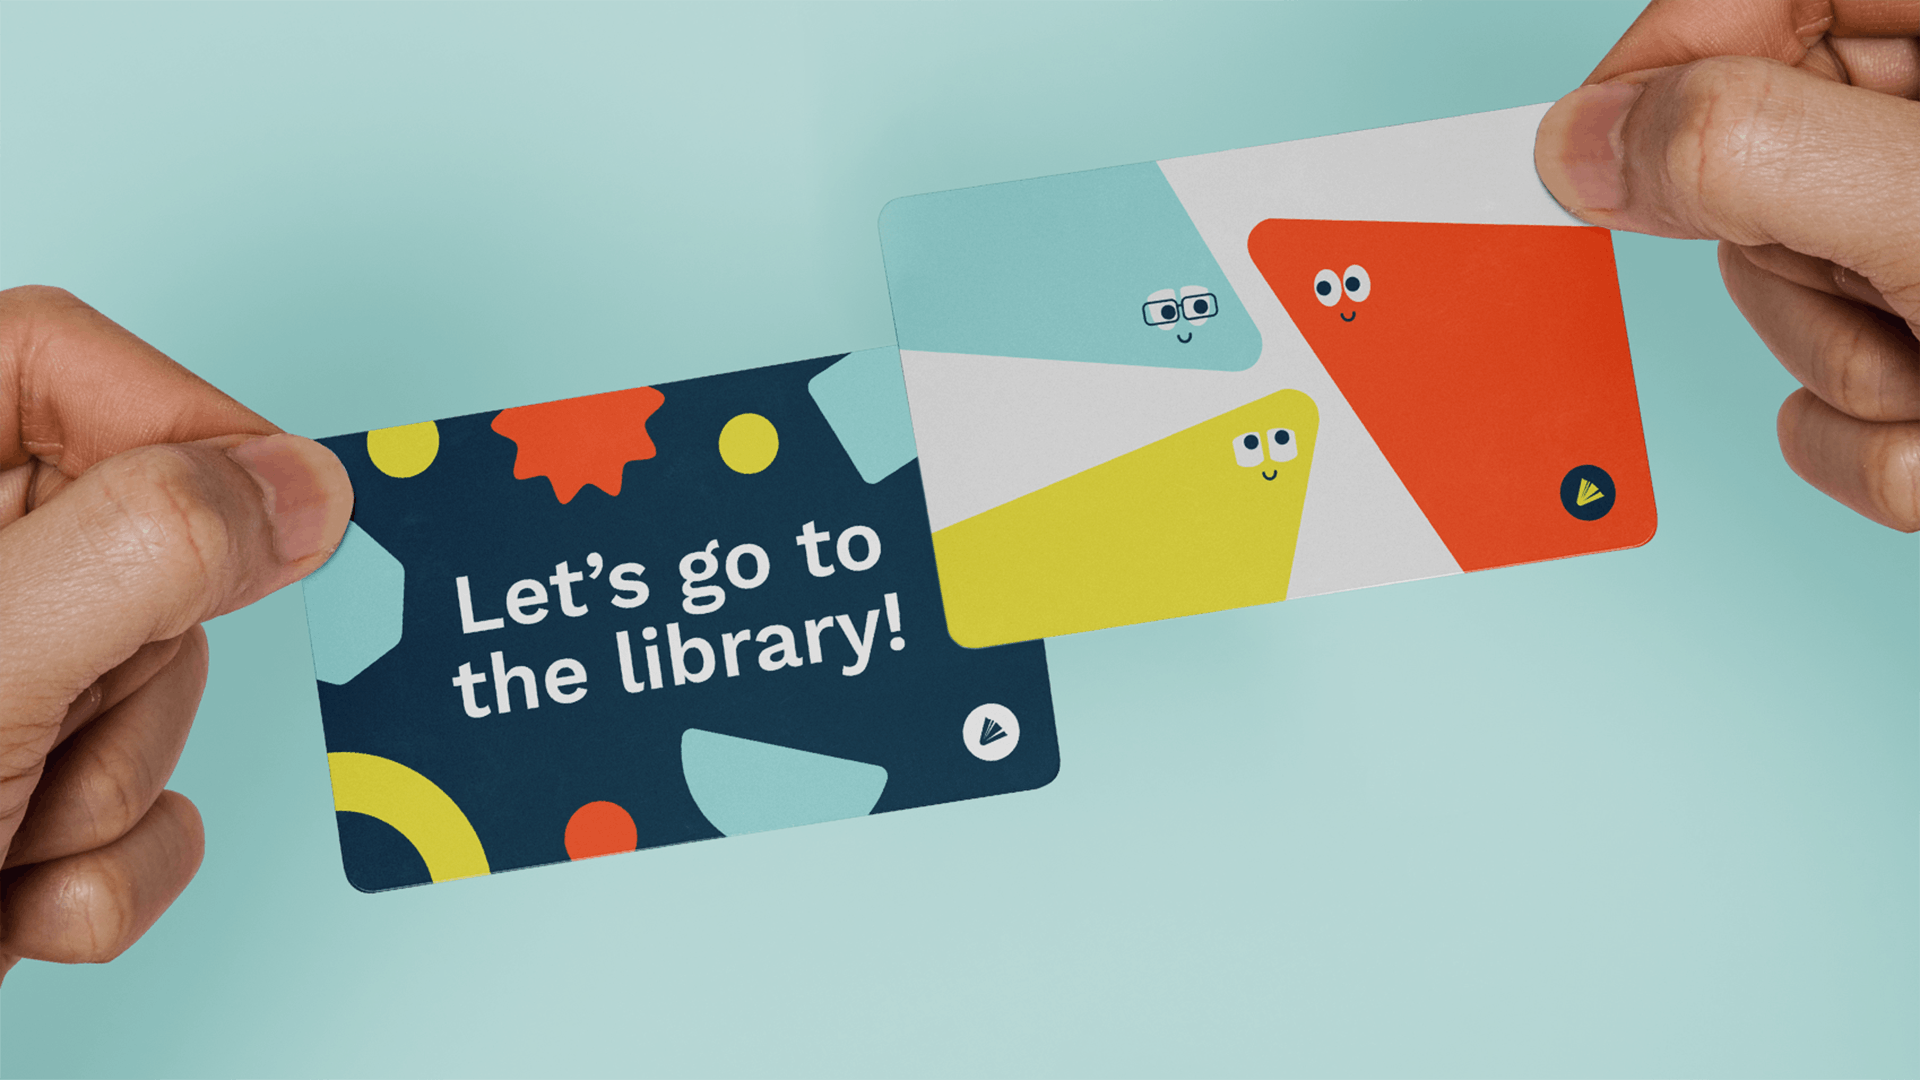 Washington County Cooperative Library library card designs. 